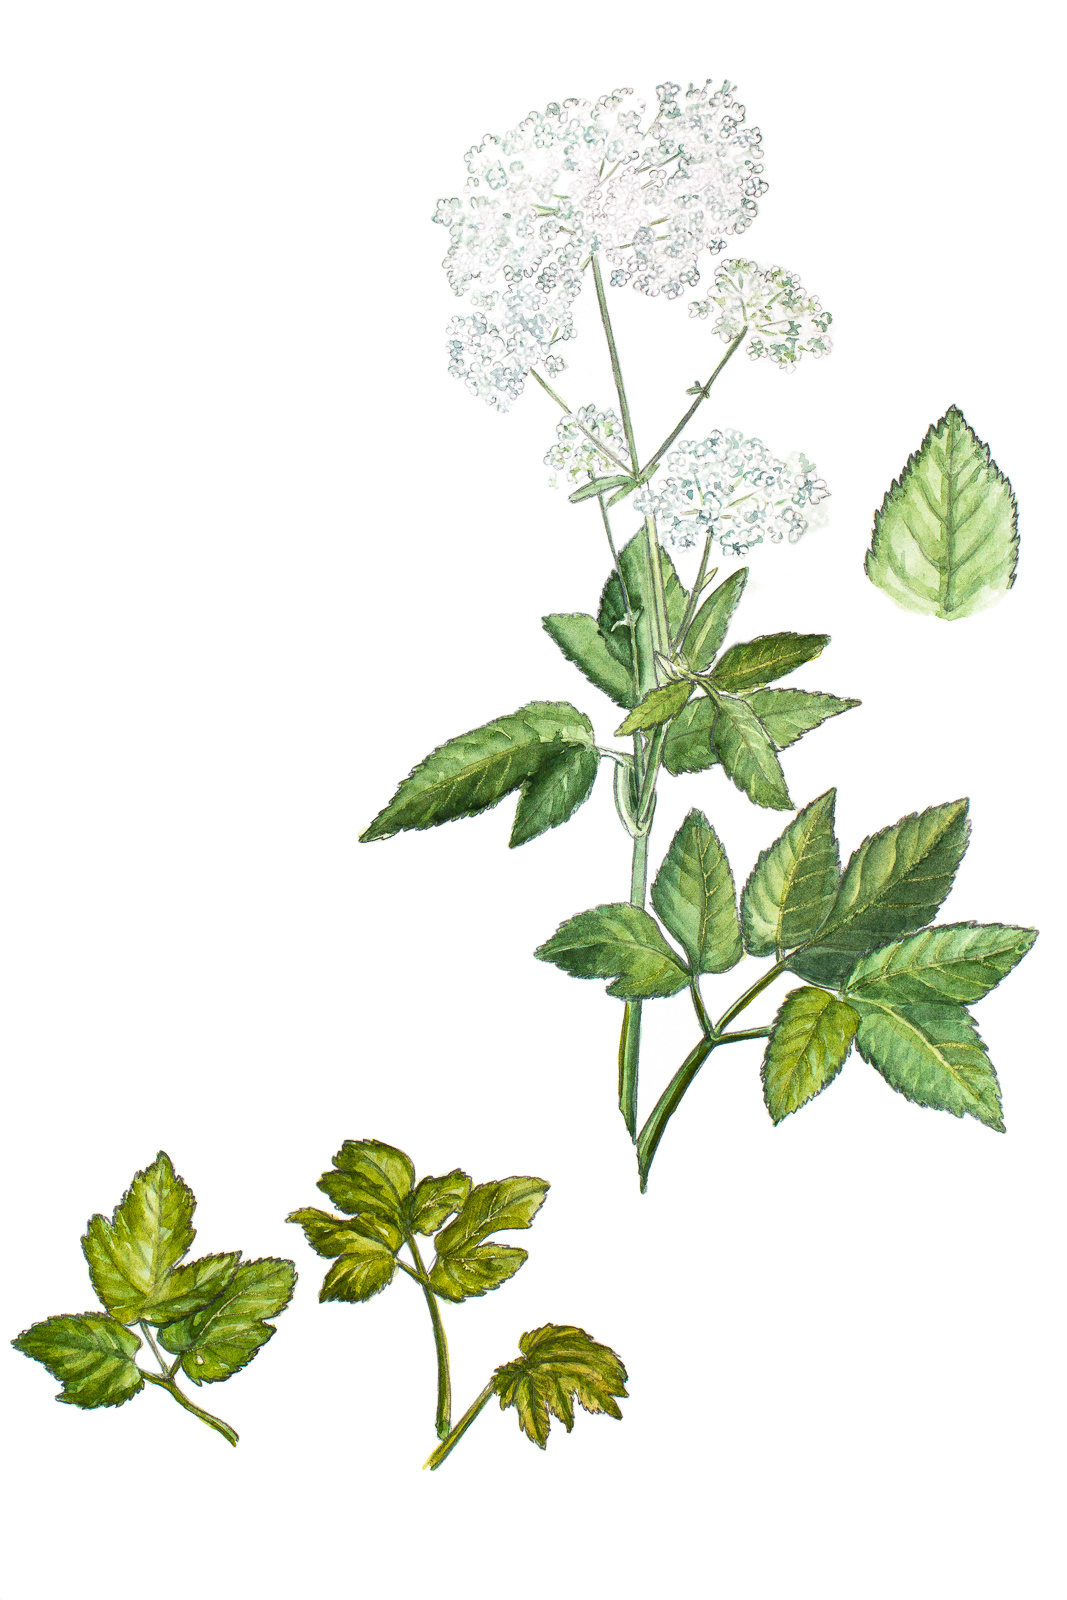 Adobe Portfolio flower elder ground-elder botanical illustration Nature plants